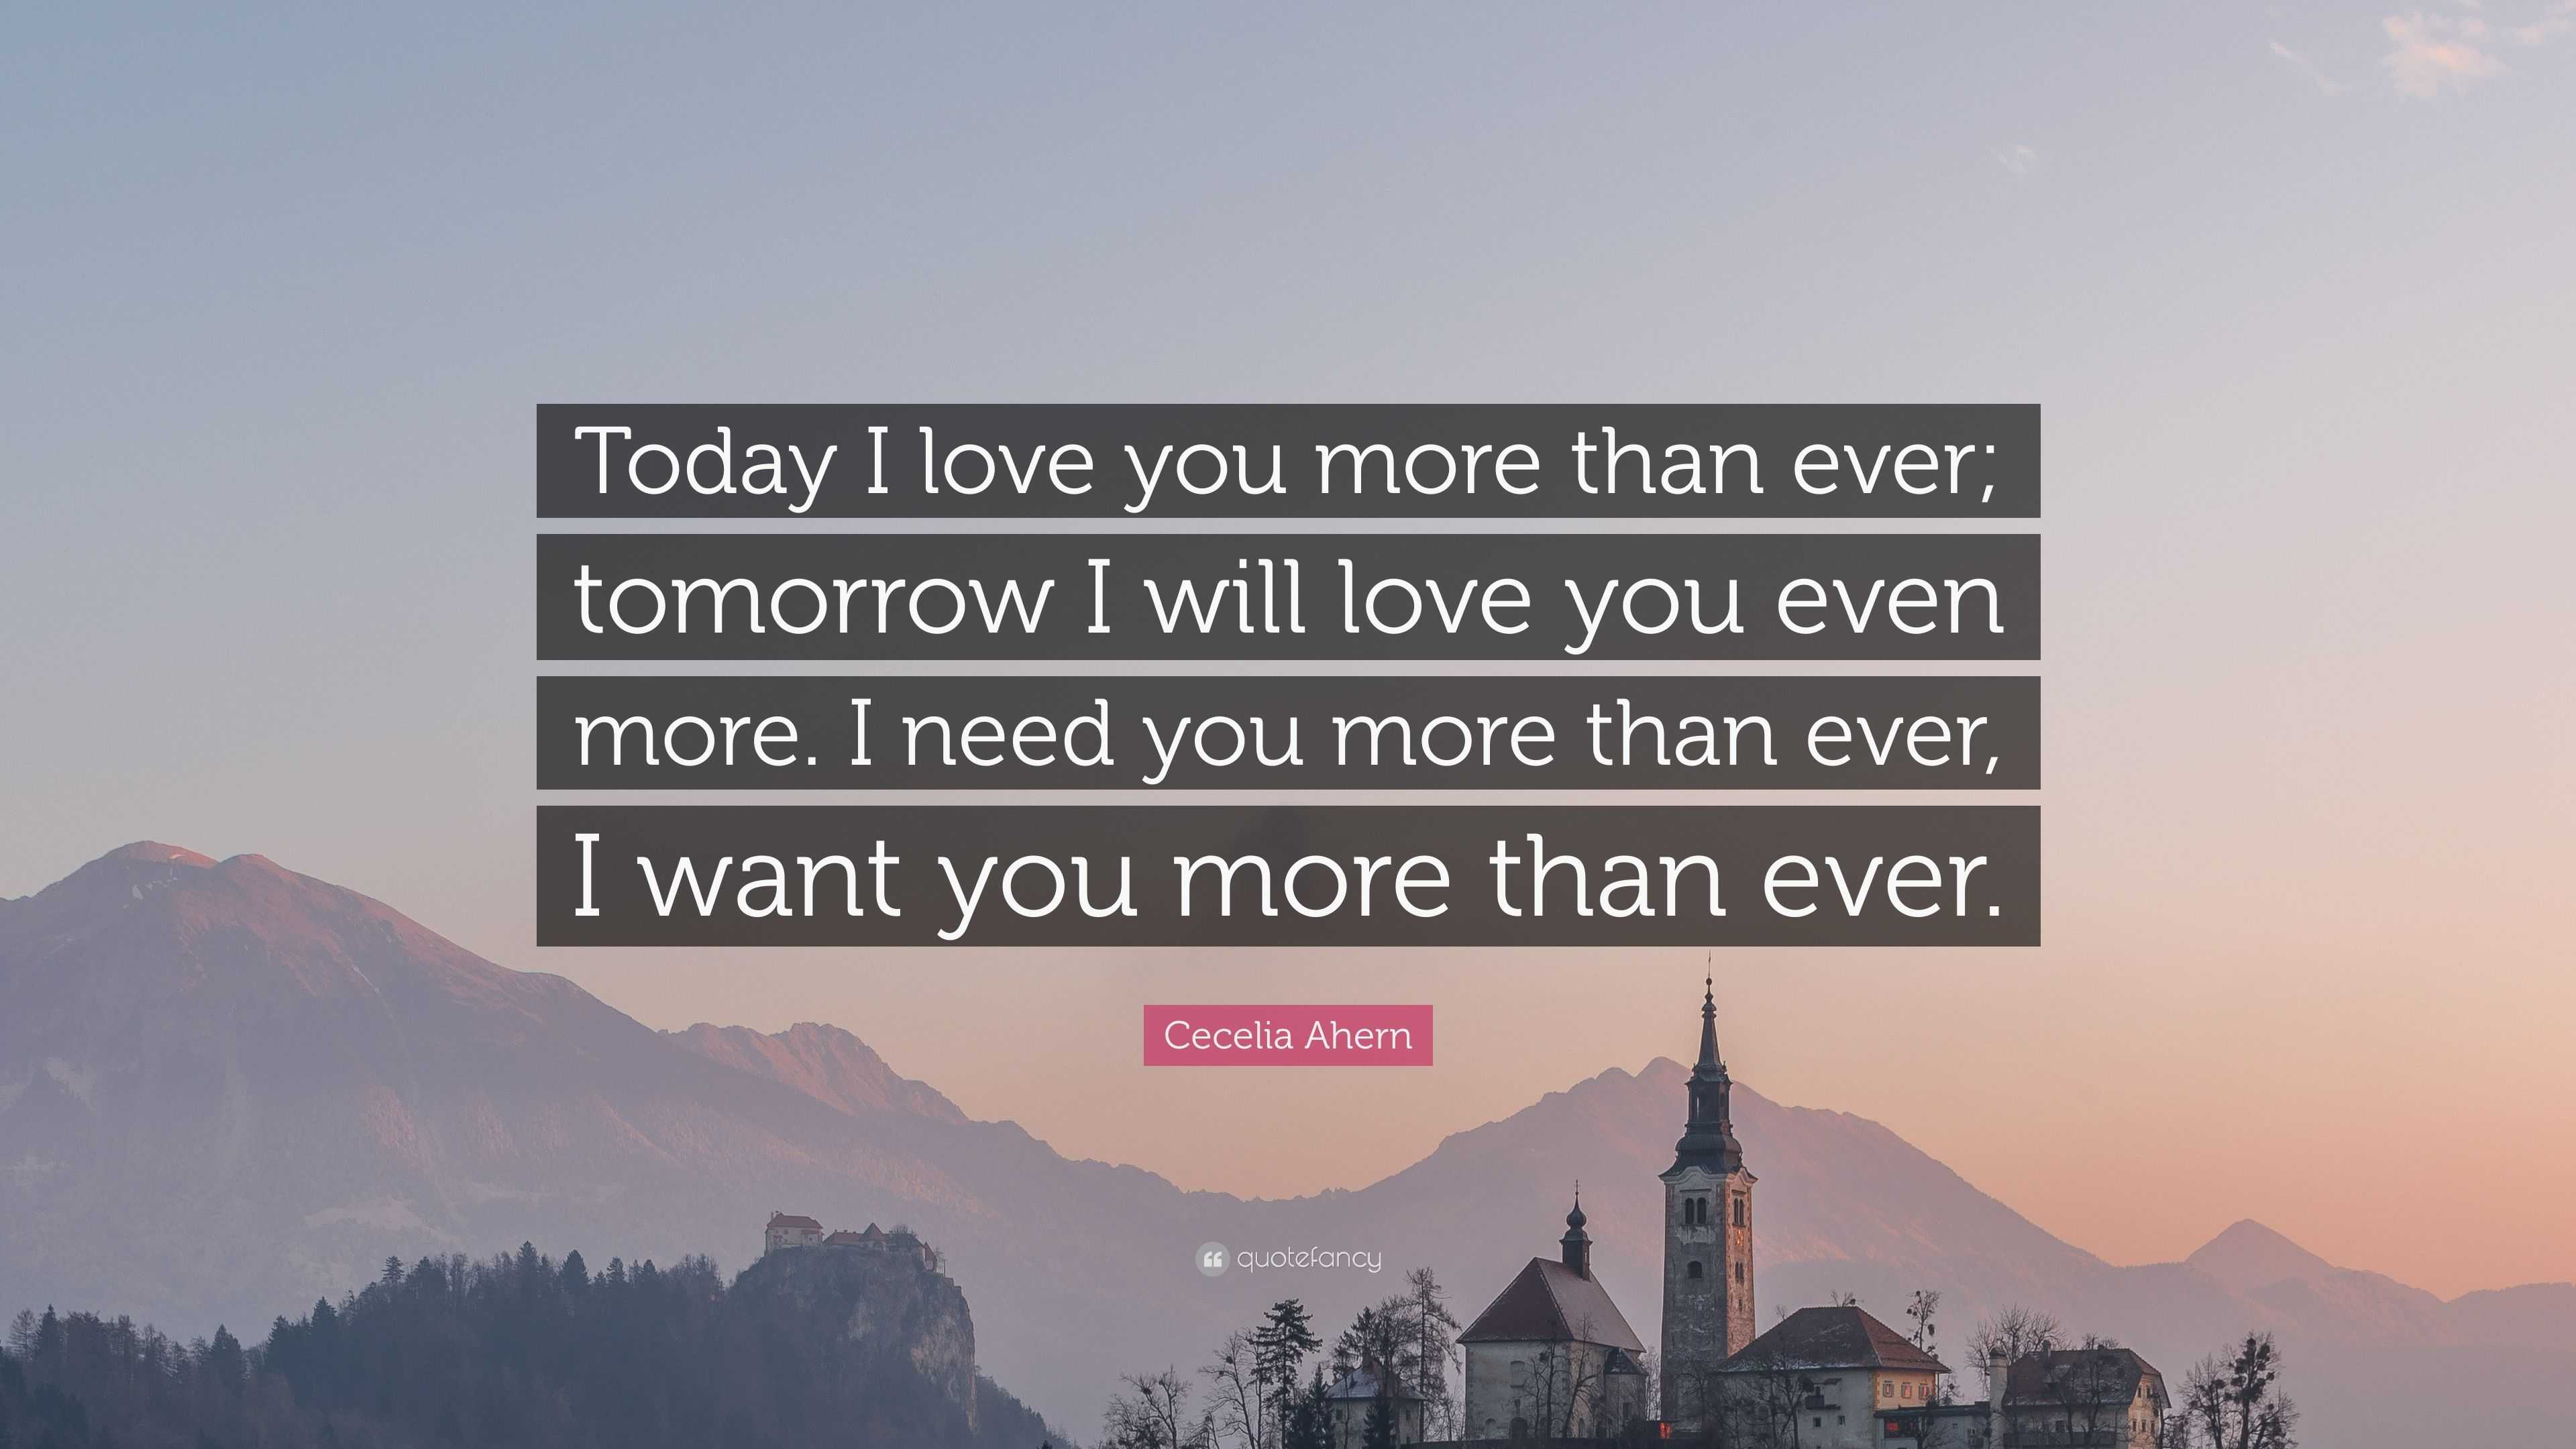 i need you more than ever